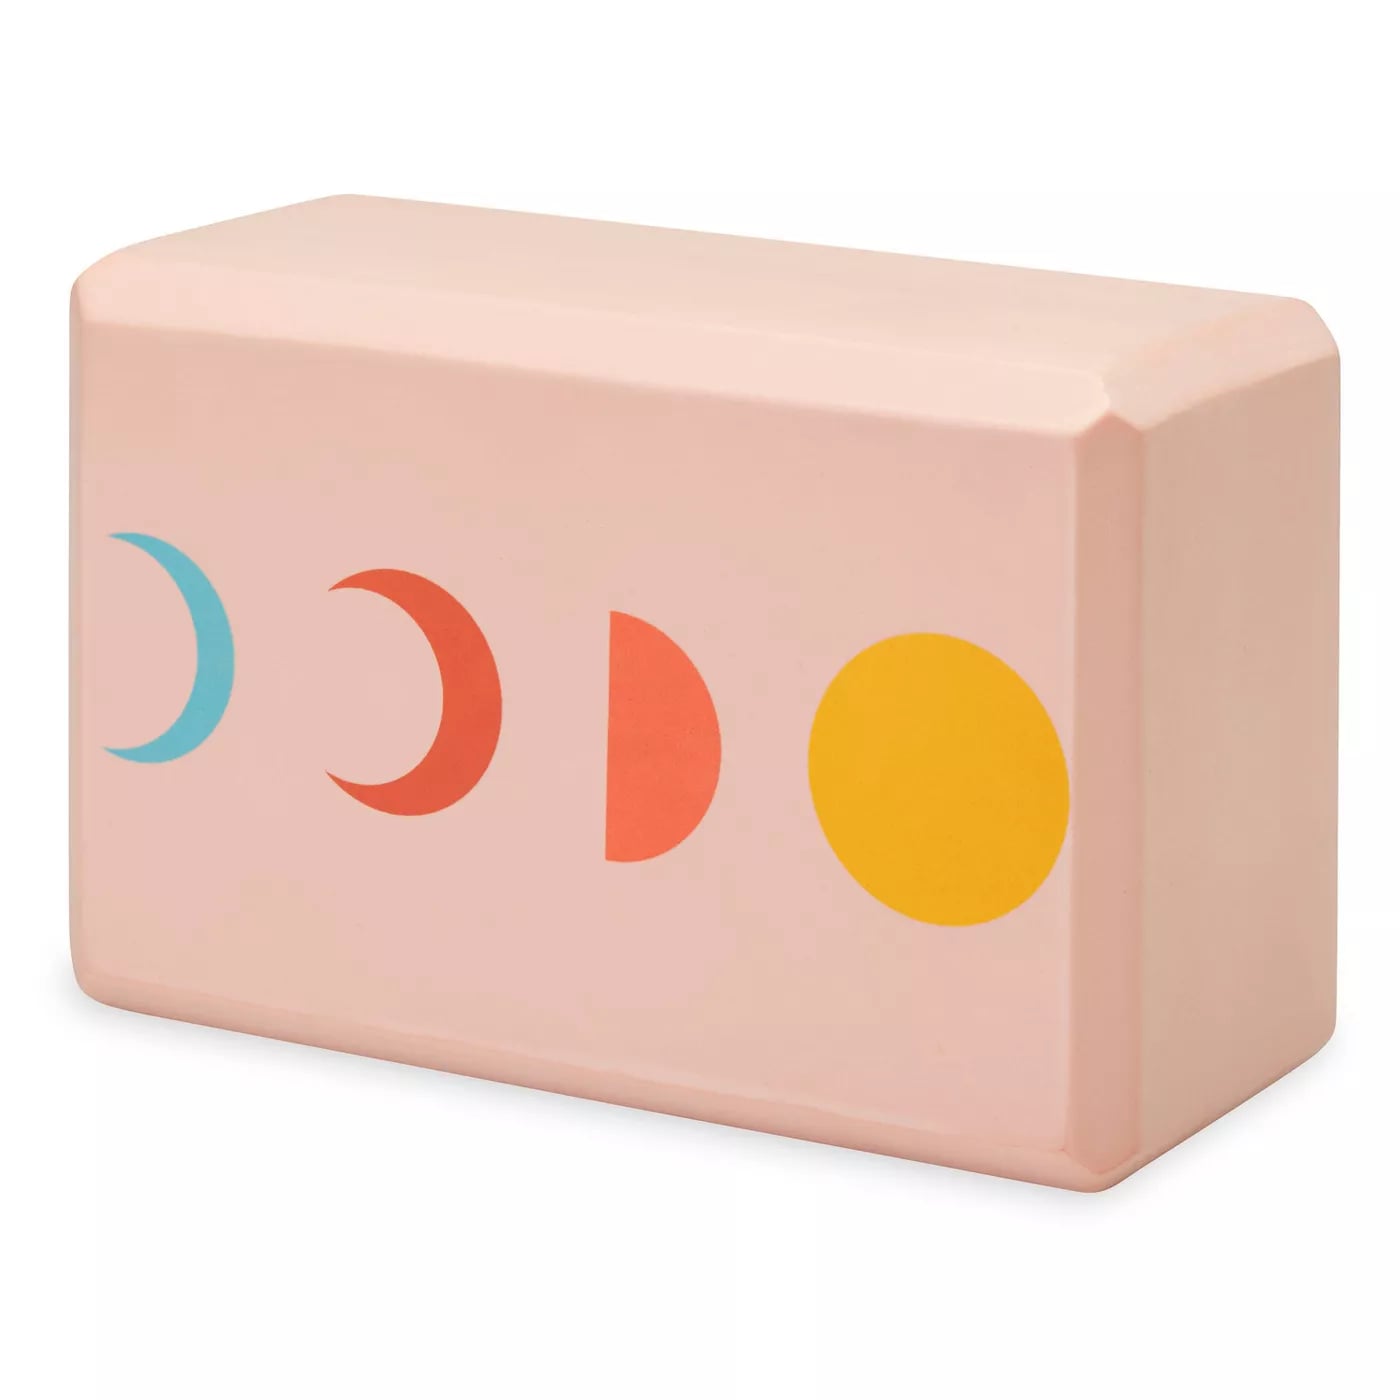 Cushioned Yoga Block: POPSUGAR Yoga Block - Pink Moon Phases